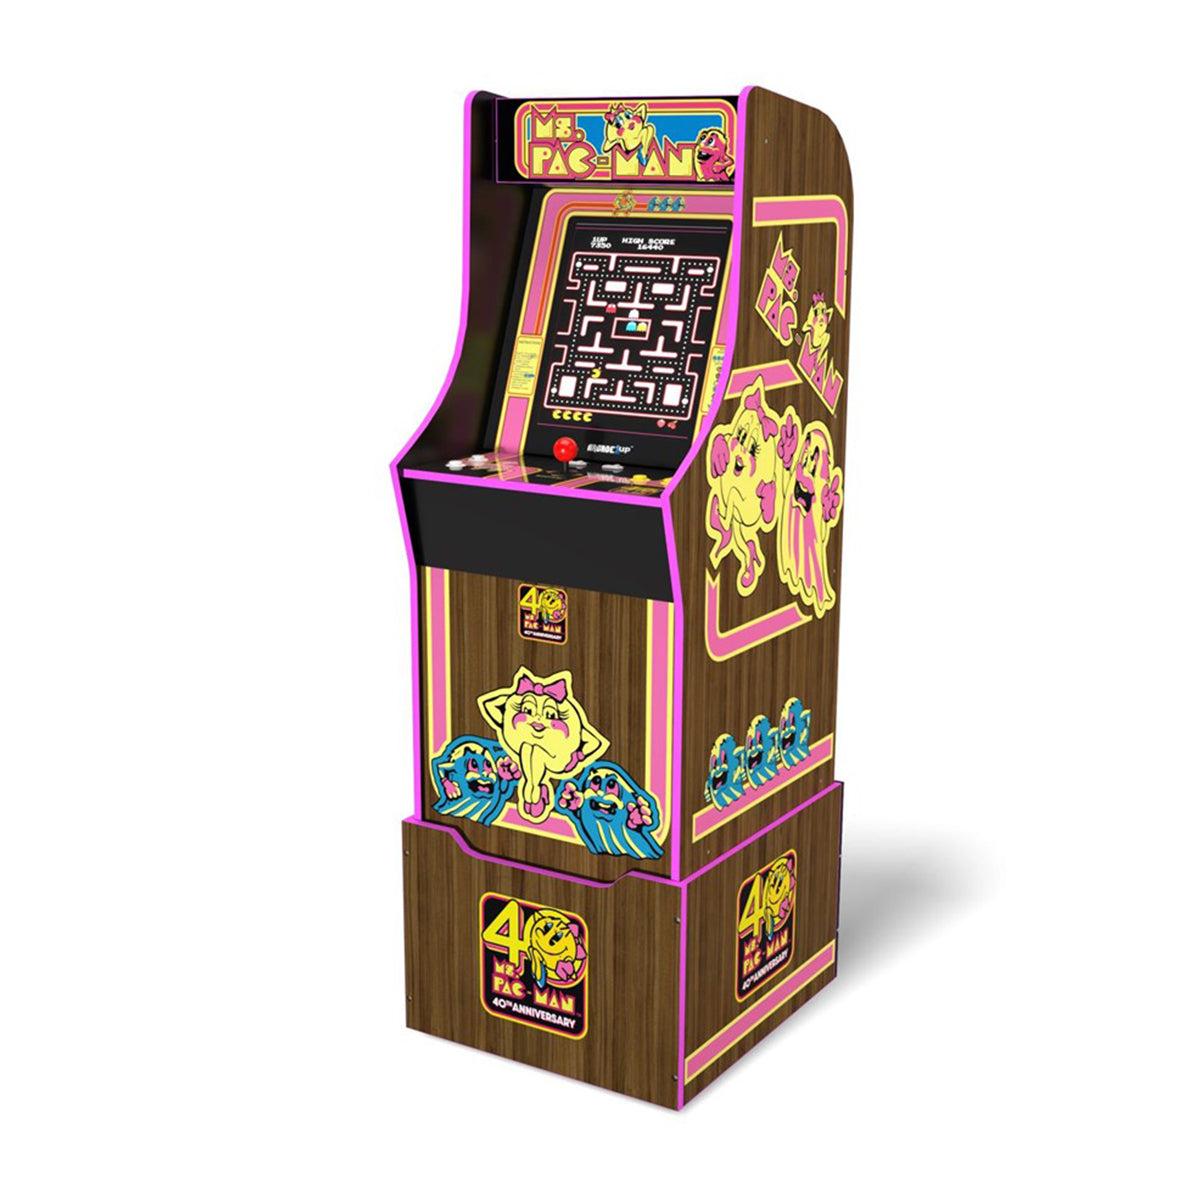 Arcade1Up MS Pac-Man 40th Anniversary Edition